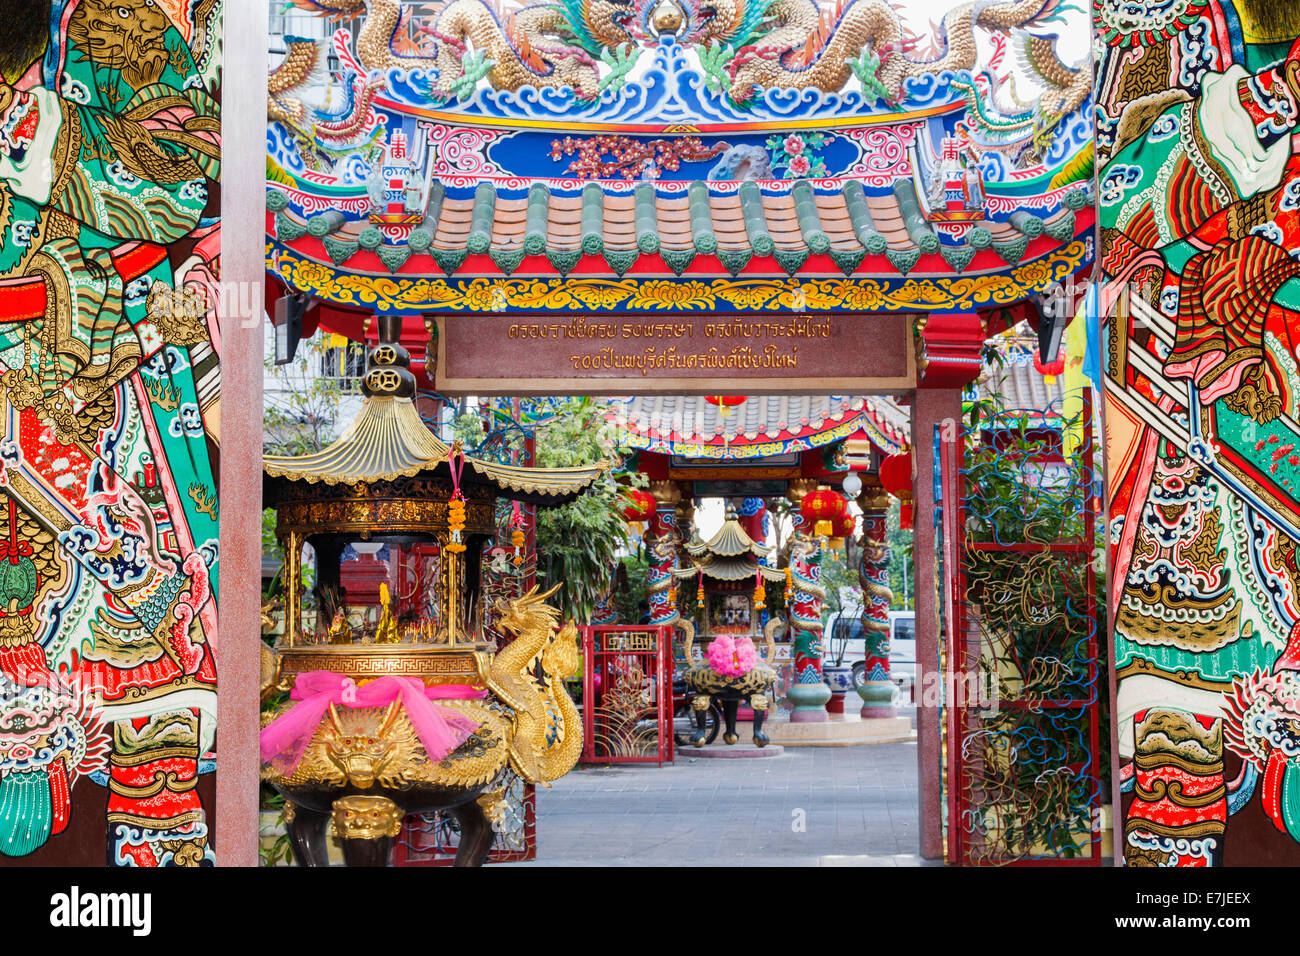 Asia, Thailand, Chiang Mai, Chinatown, Pung Tao Gong Temple, Chinese, Chinese Temple, Temple, Temples Stock Photo